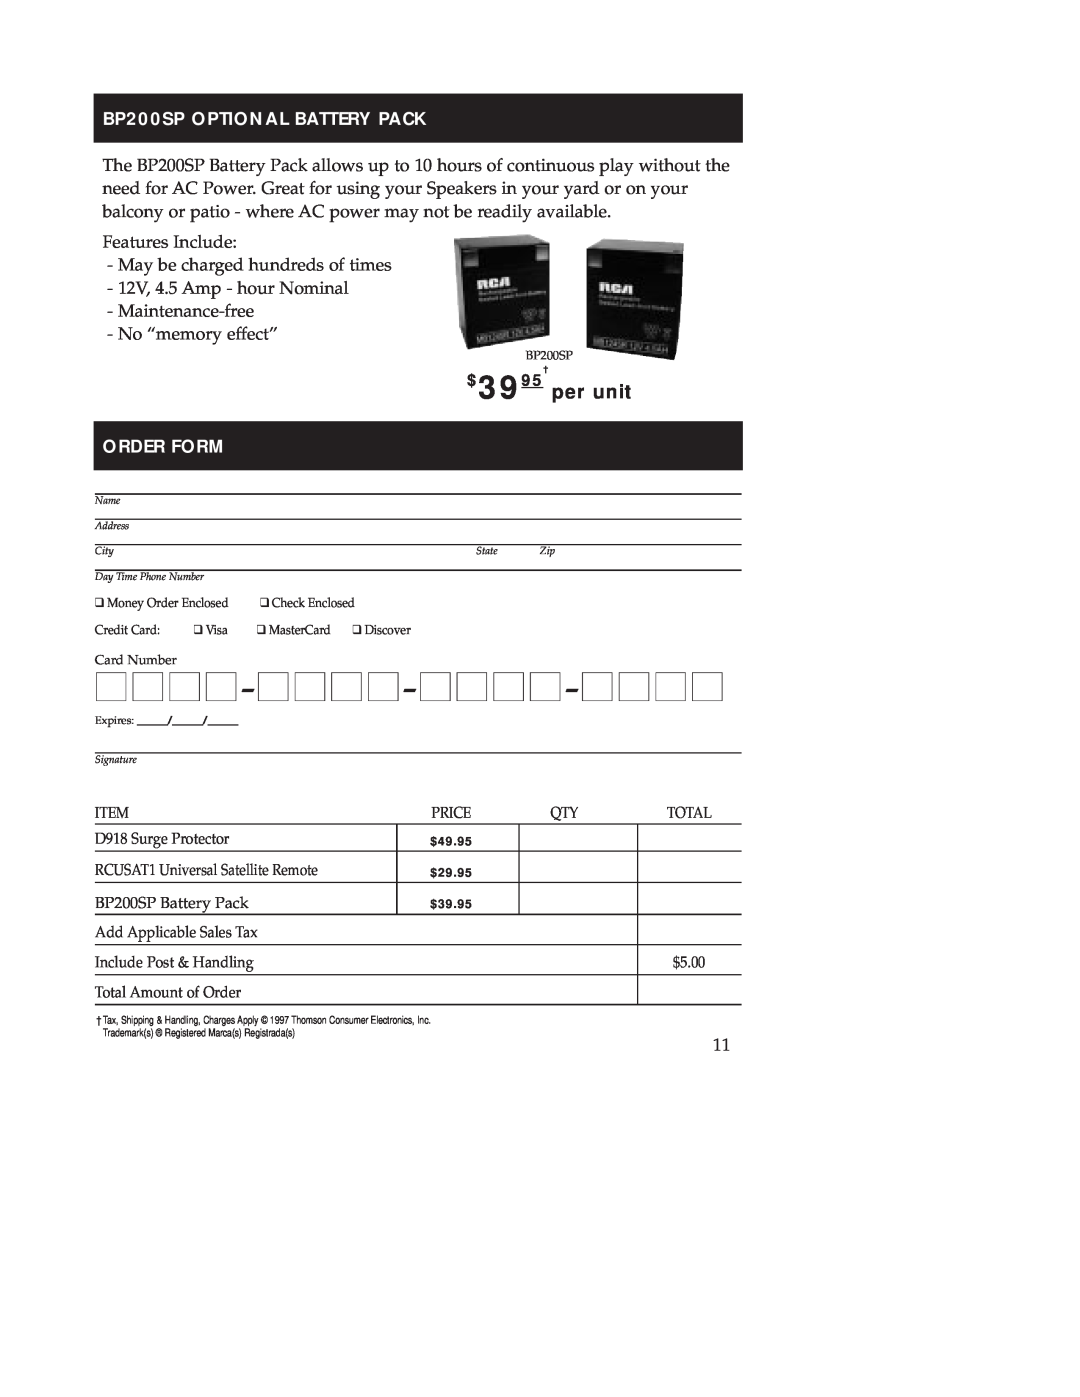 RCA WSP200 manual BP200SP OPTIONAL BATTERY PACK, Order Form, $3995per unit 